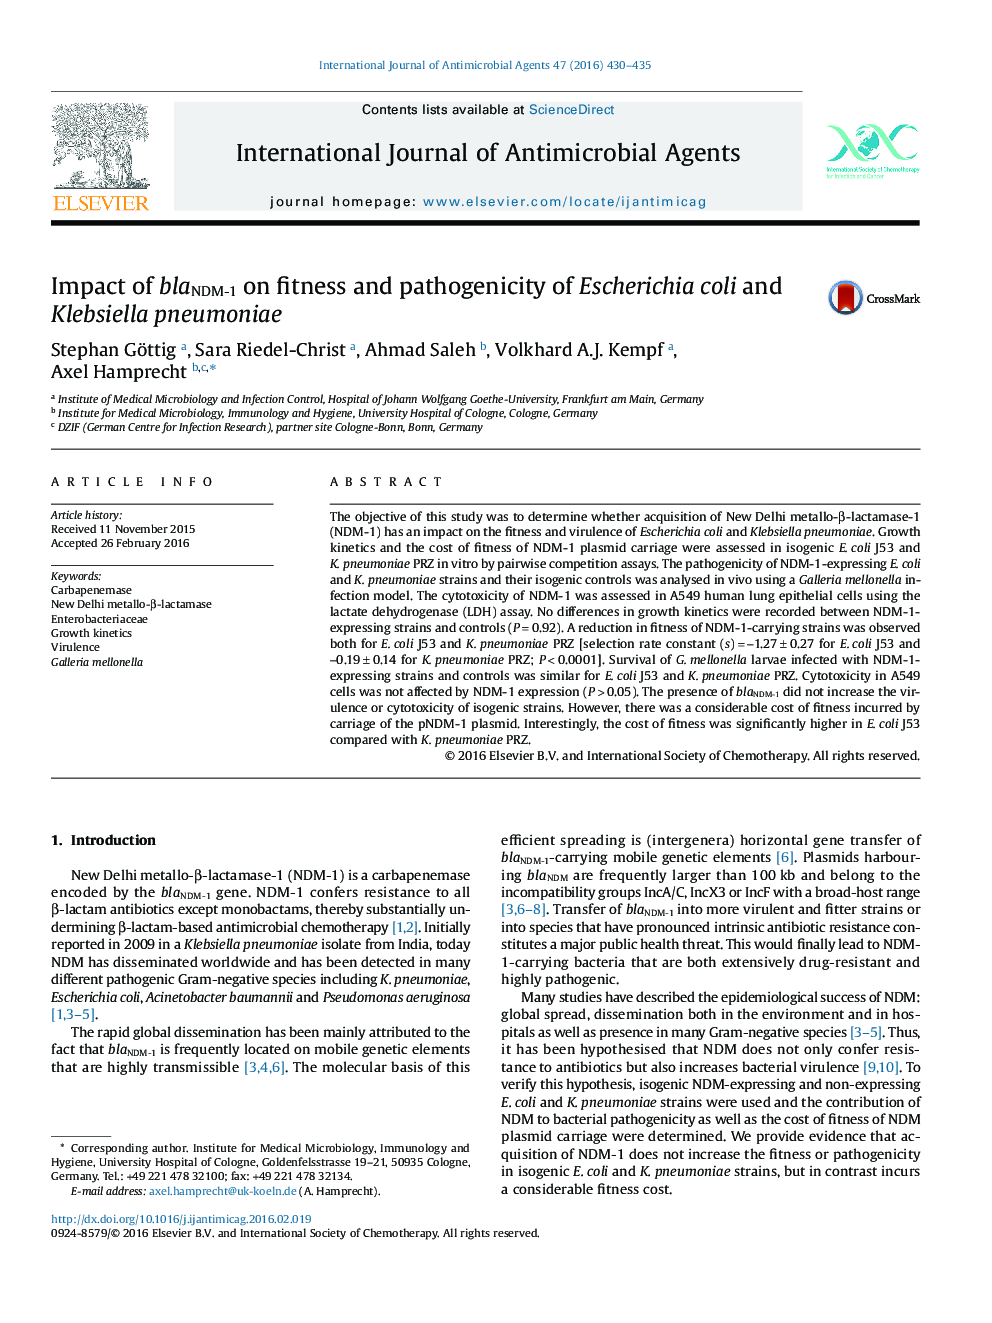 Impact of blaNDM-1 on fitness and pathogenicity of Escherichia coli and Klebsiella pneumoniae